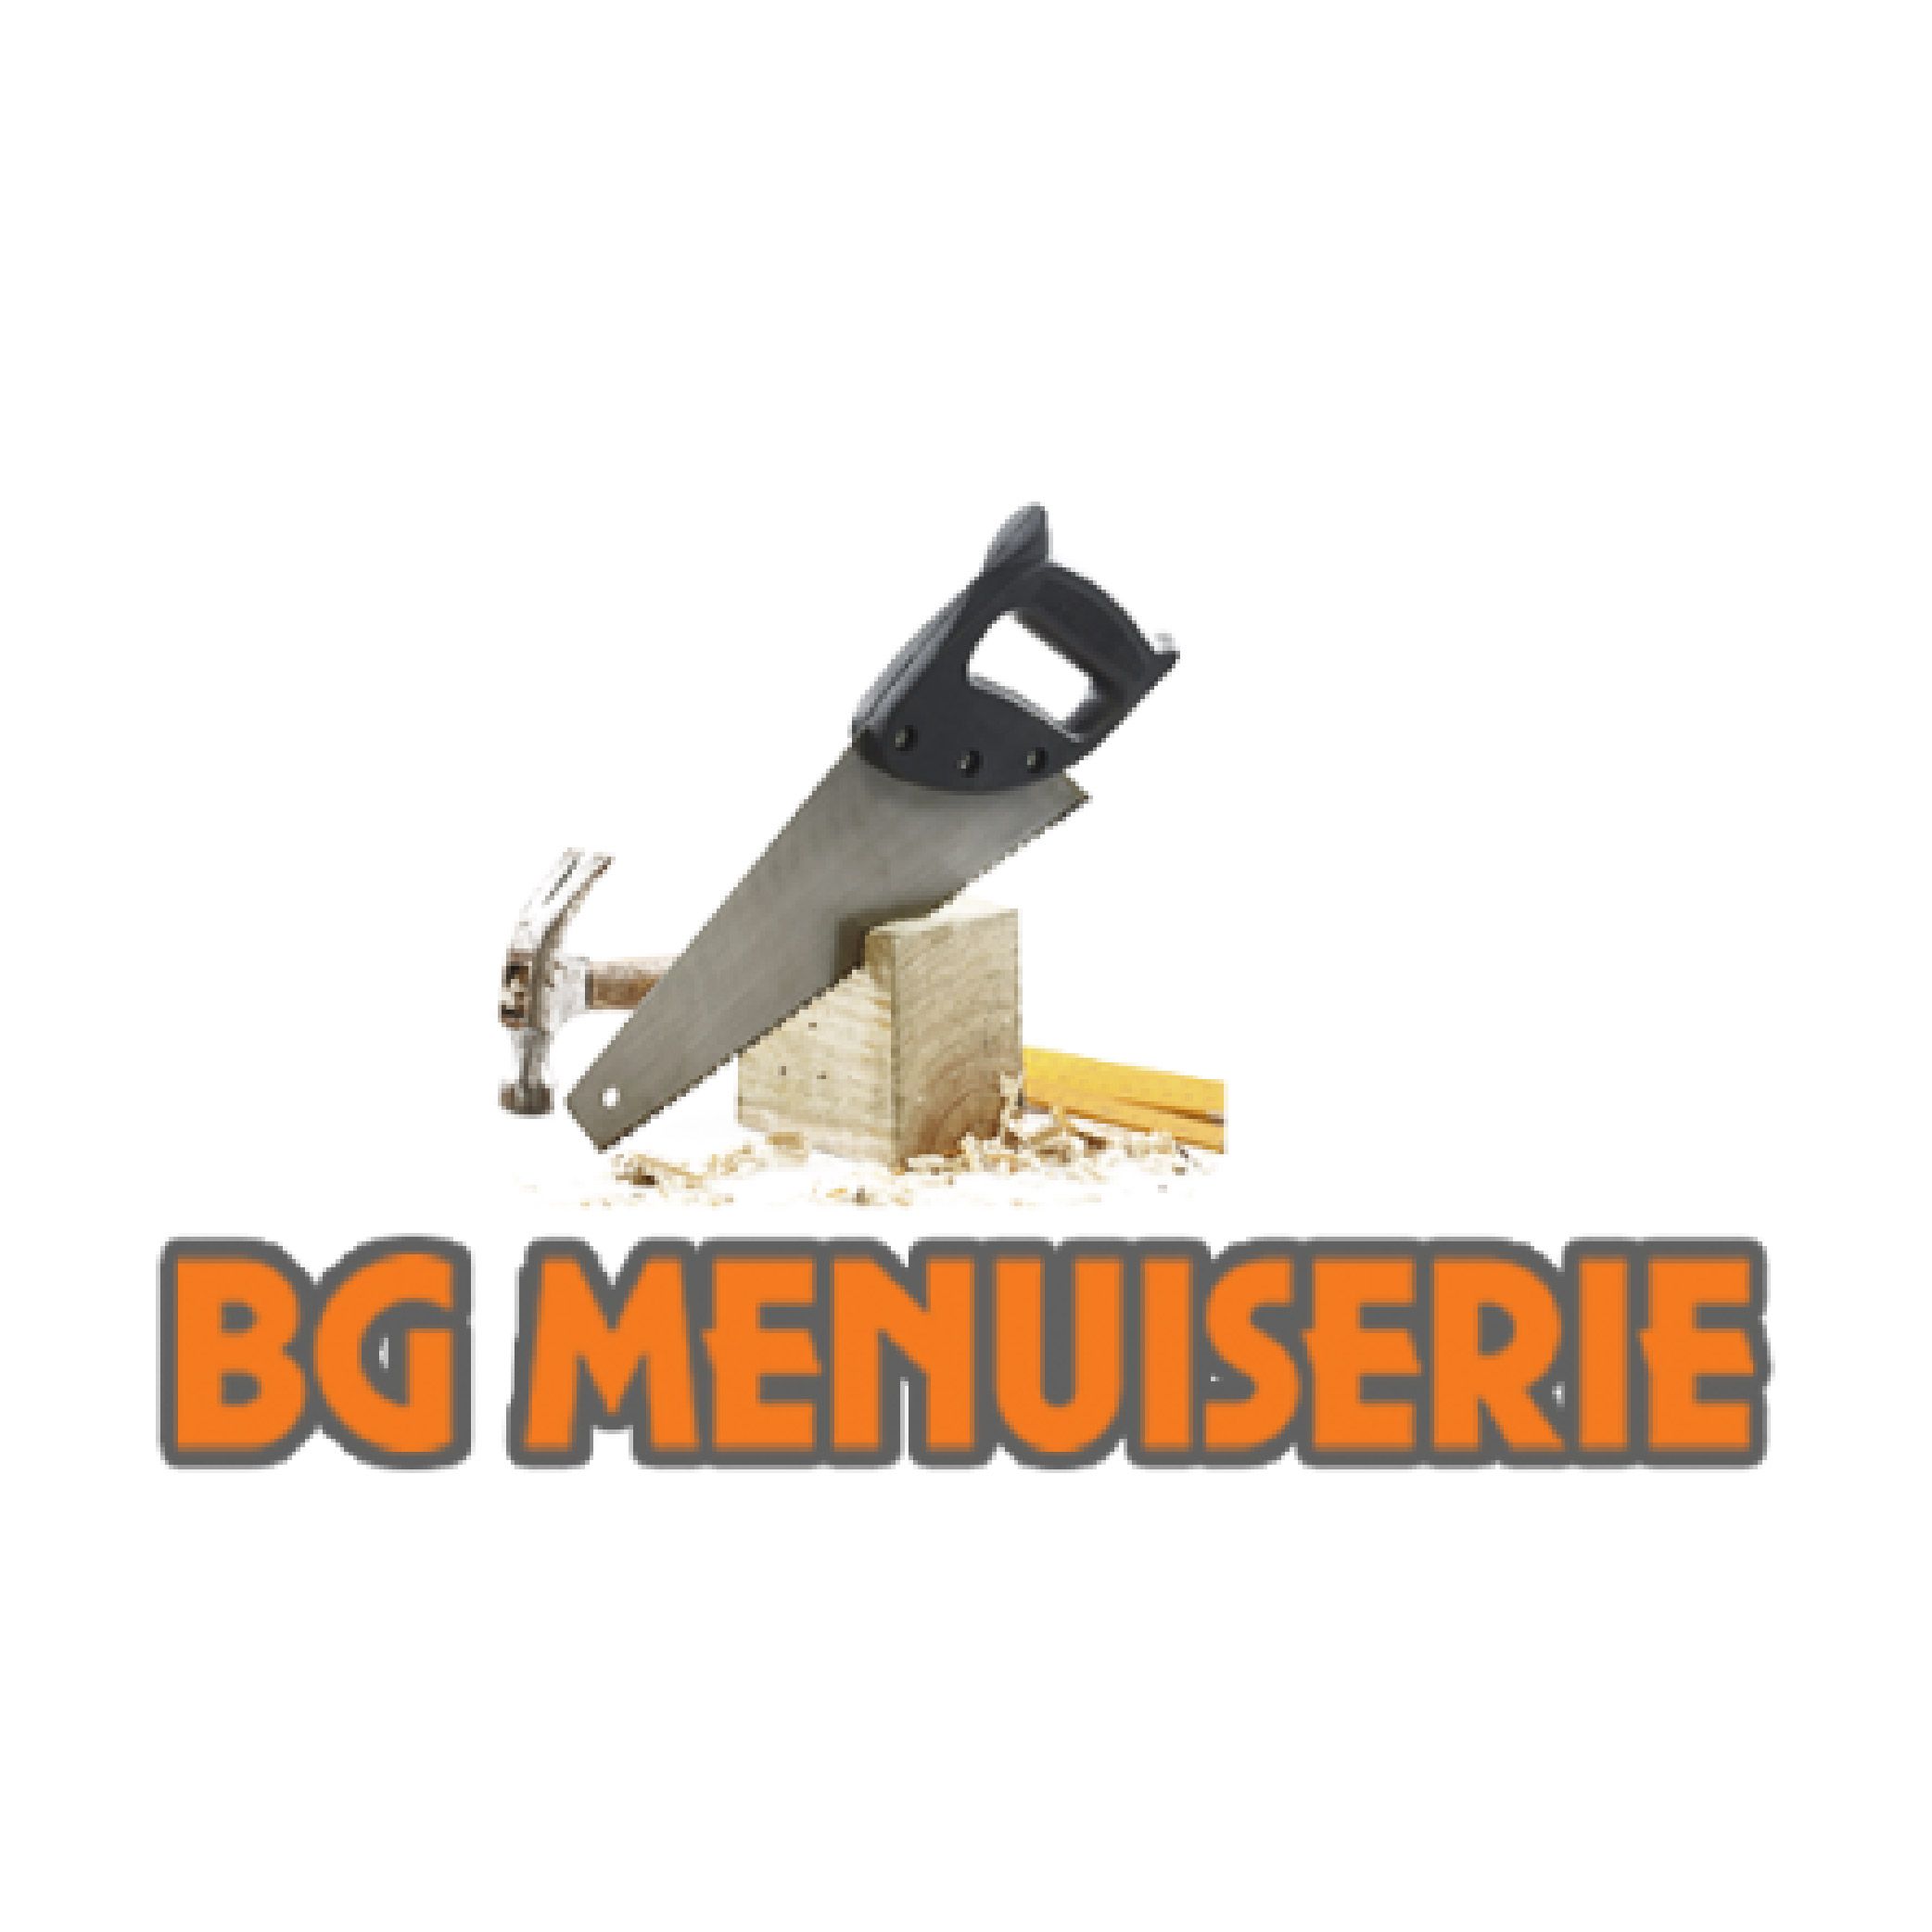 BG Menuiserie